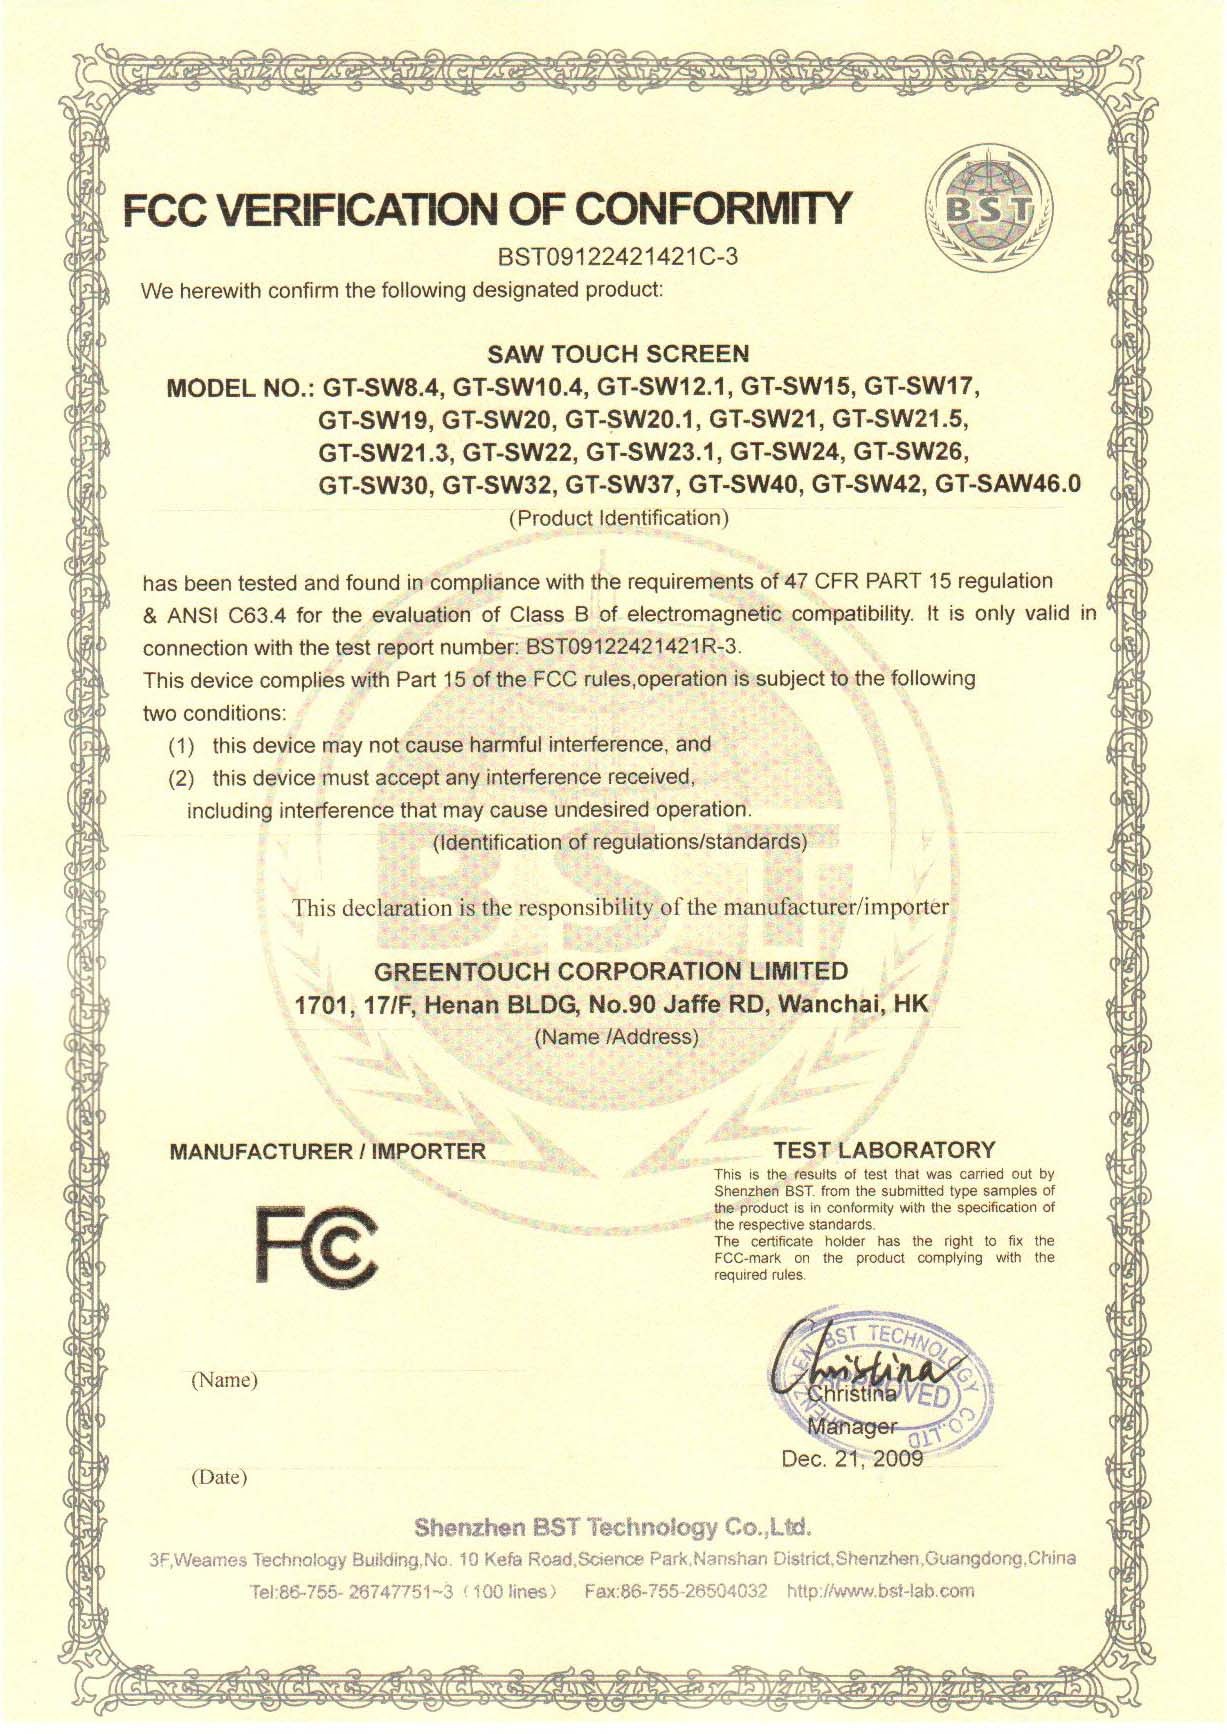 Shenzhen GreenTouch Technology Co., Ltd Certifications